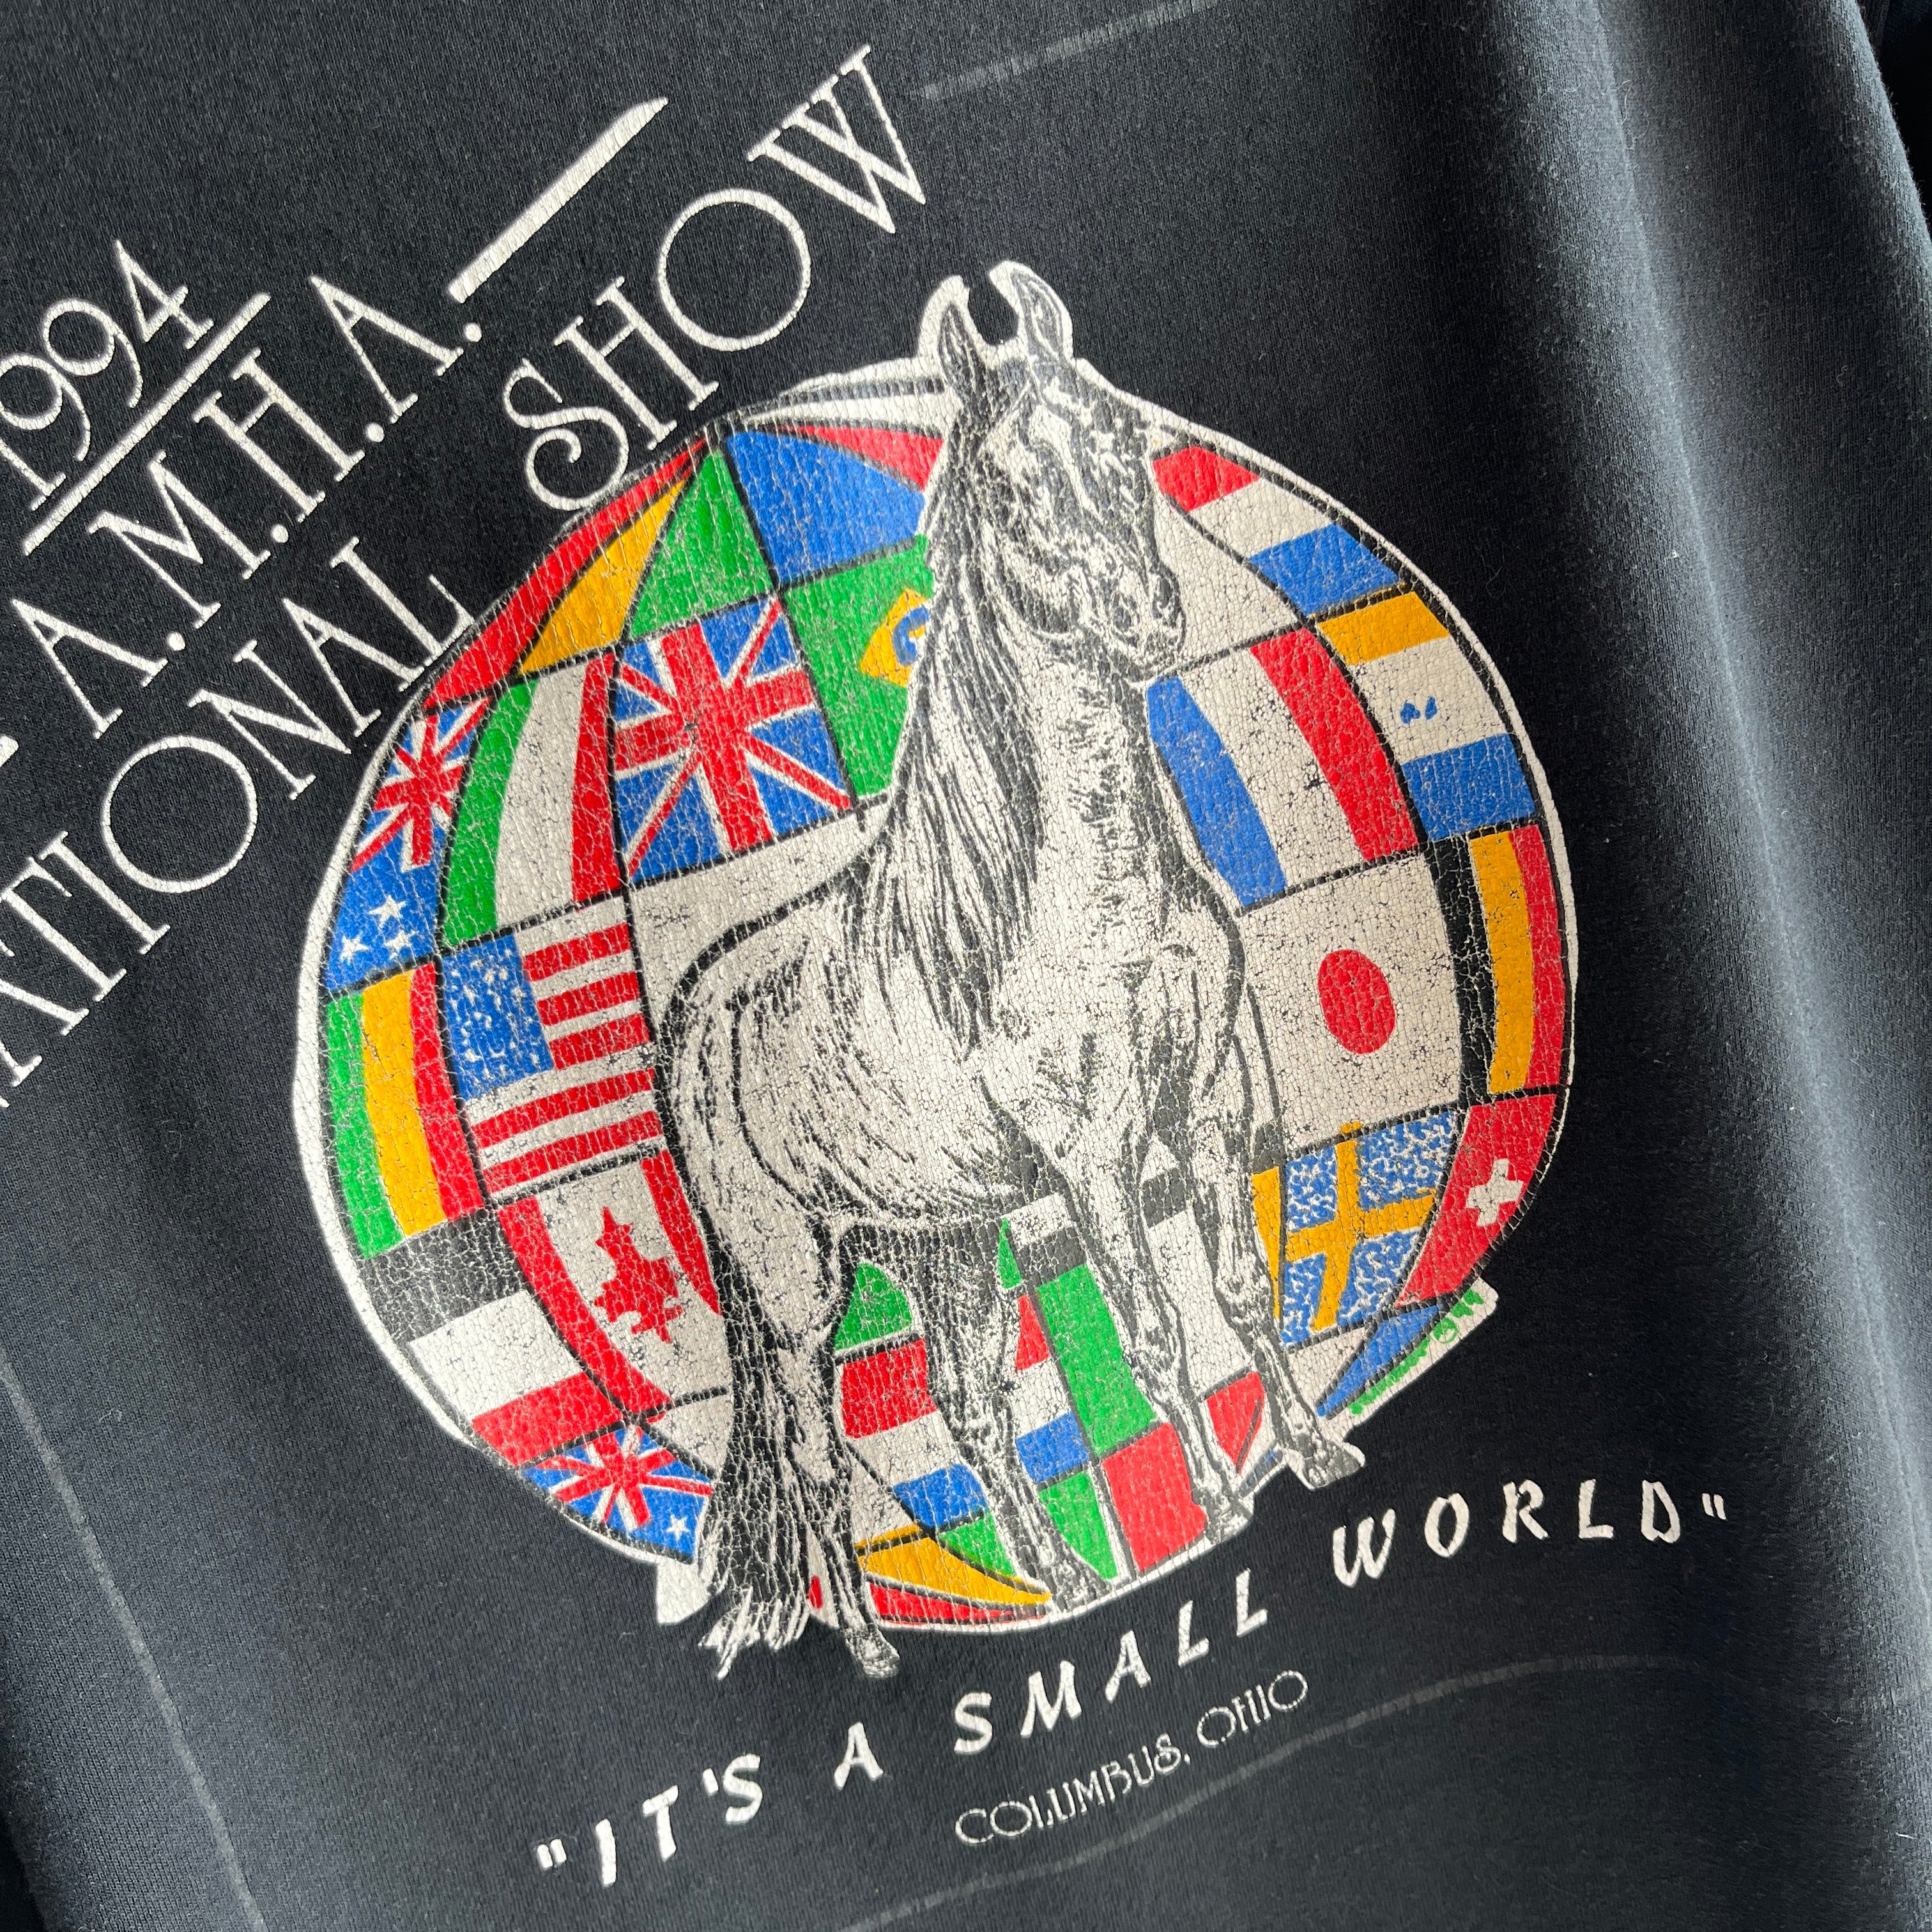 1994 American Miniature Association - AMHA National Horse Show T-Shirt !!!!!